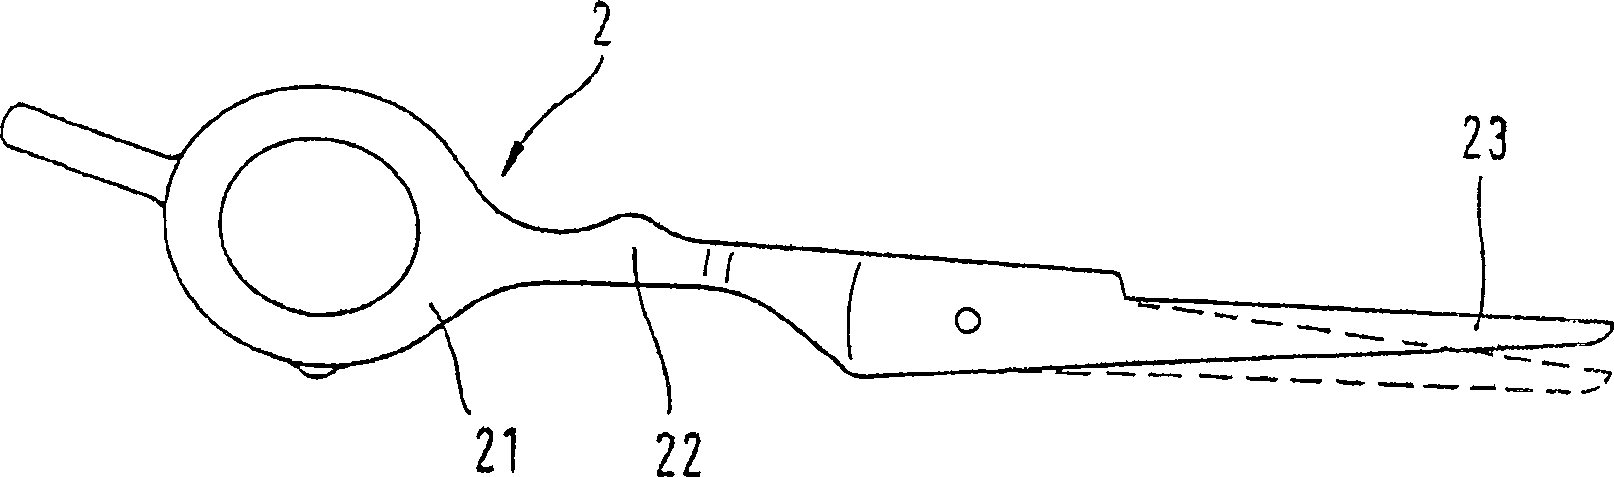 Method for manufacturing barber scissors